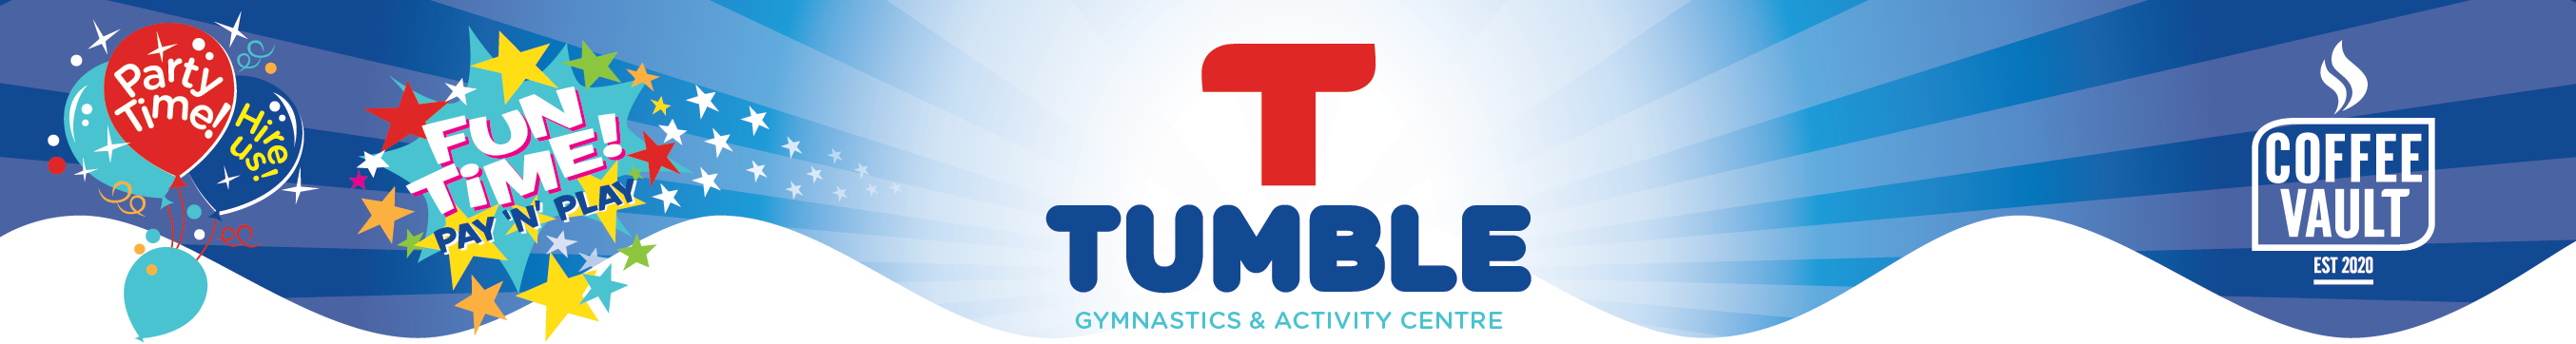 Fun Time - Tumble Gymnastics and Activity Centre